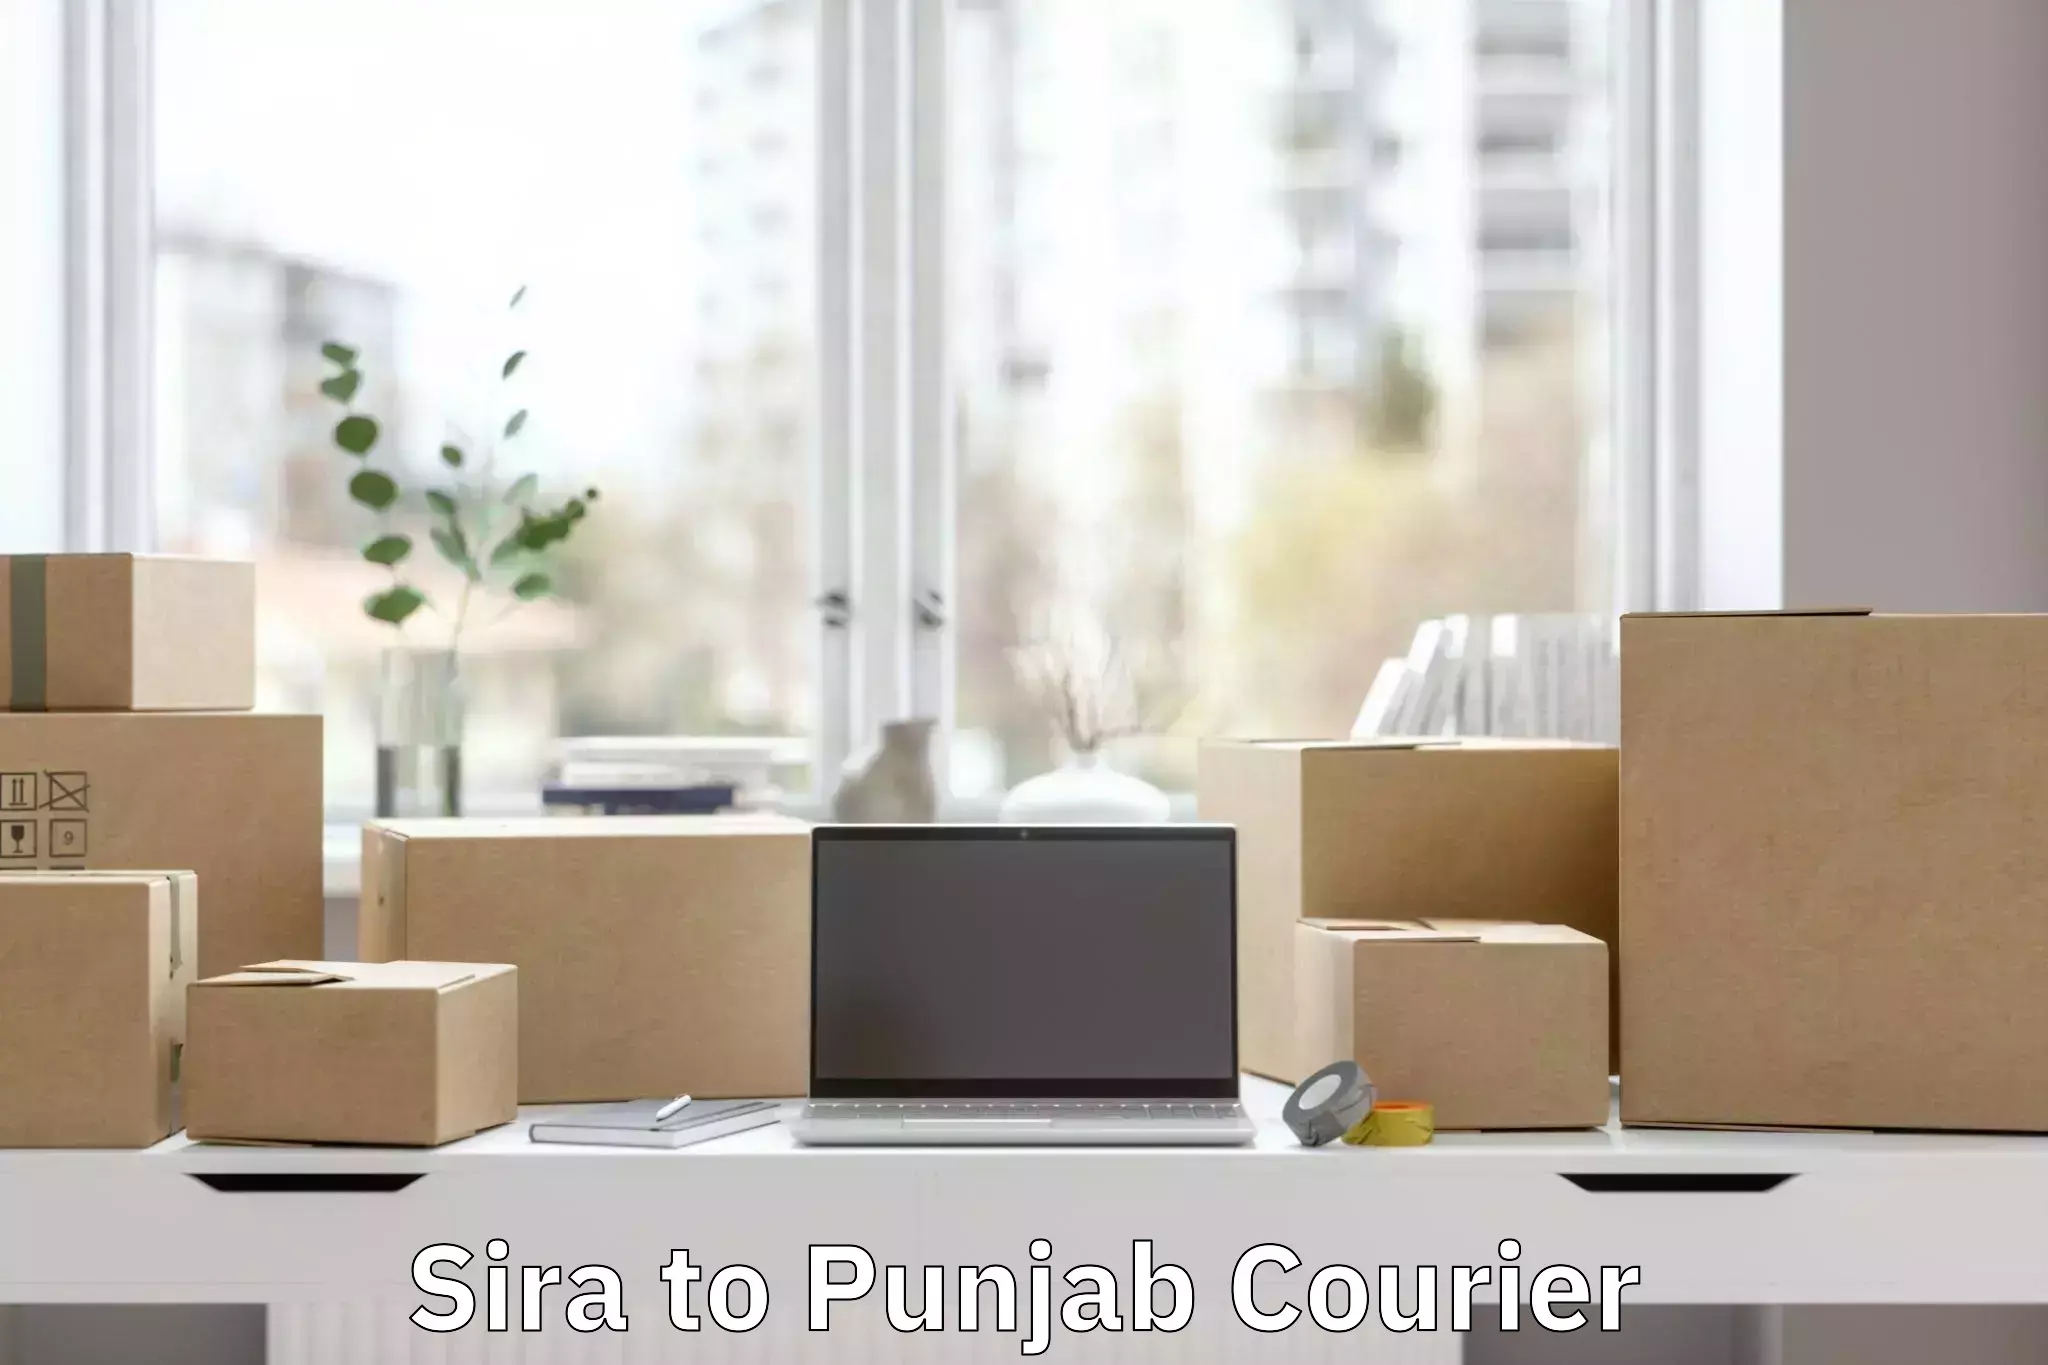 Urgent luggage shipment Sira to Punjab